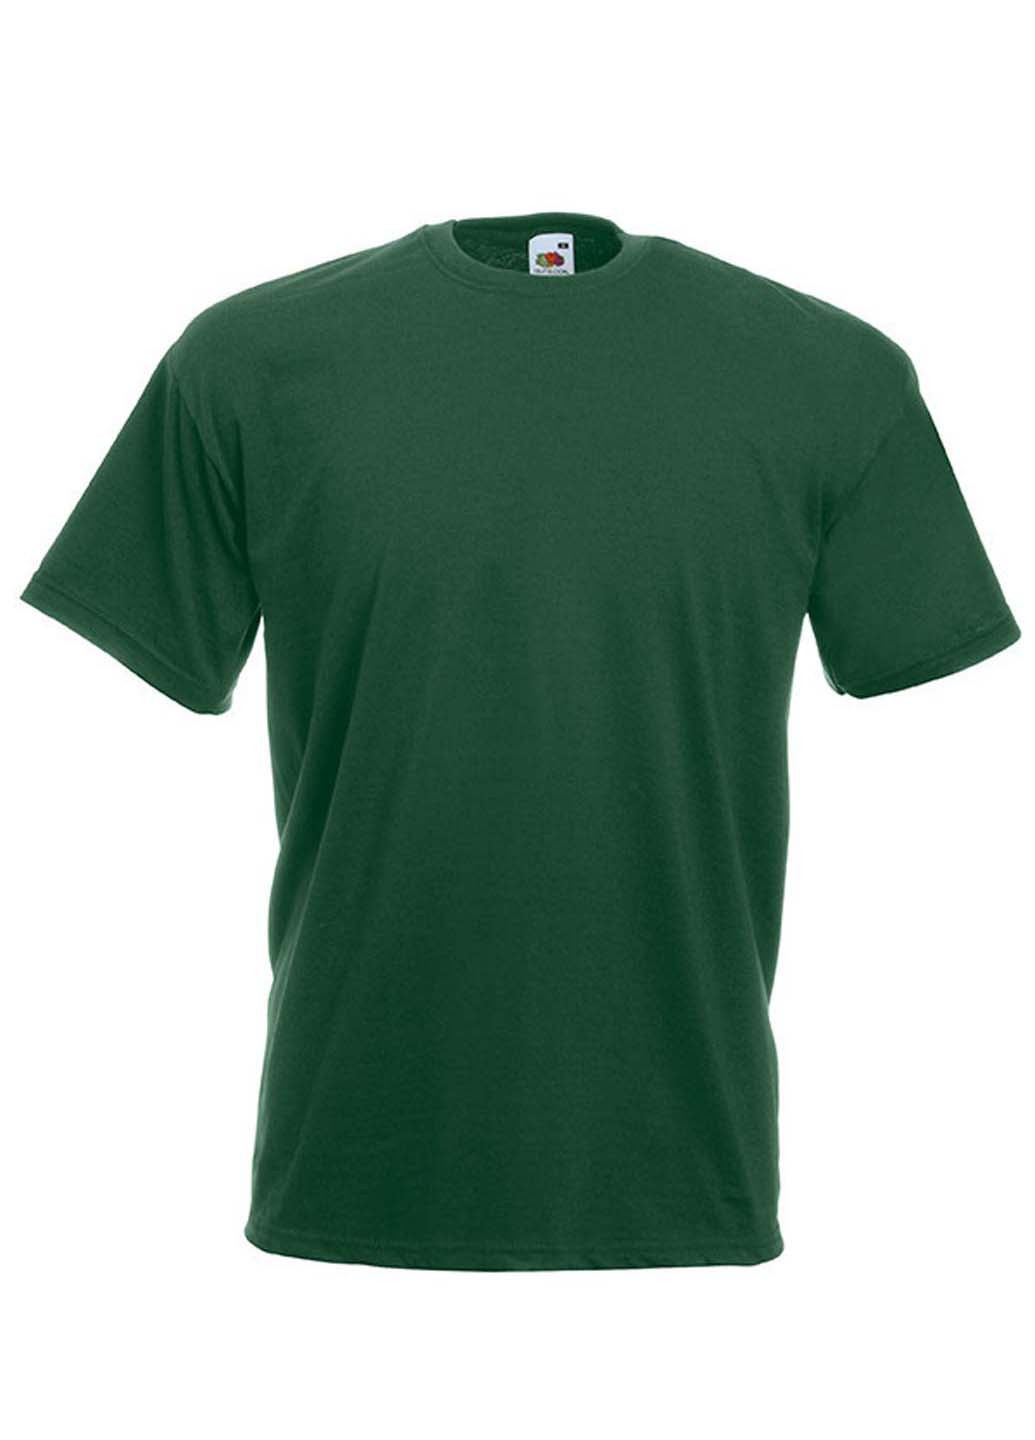 Темно-зеленая футболка Fruit of the Loom Ringspun premium